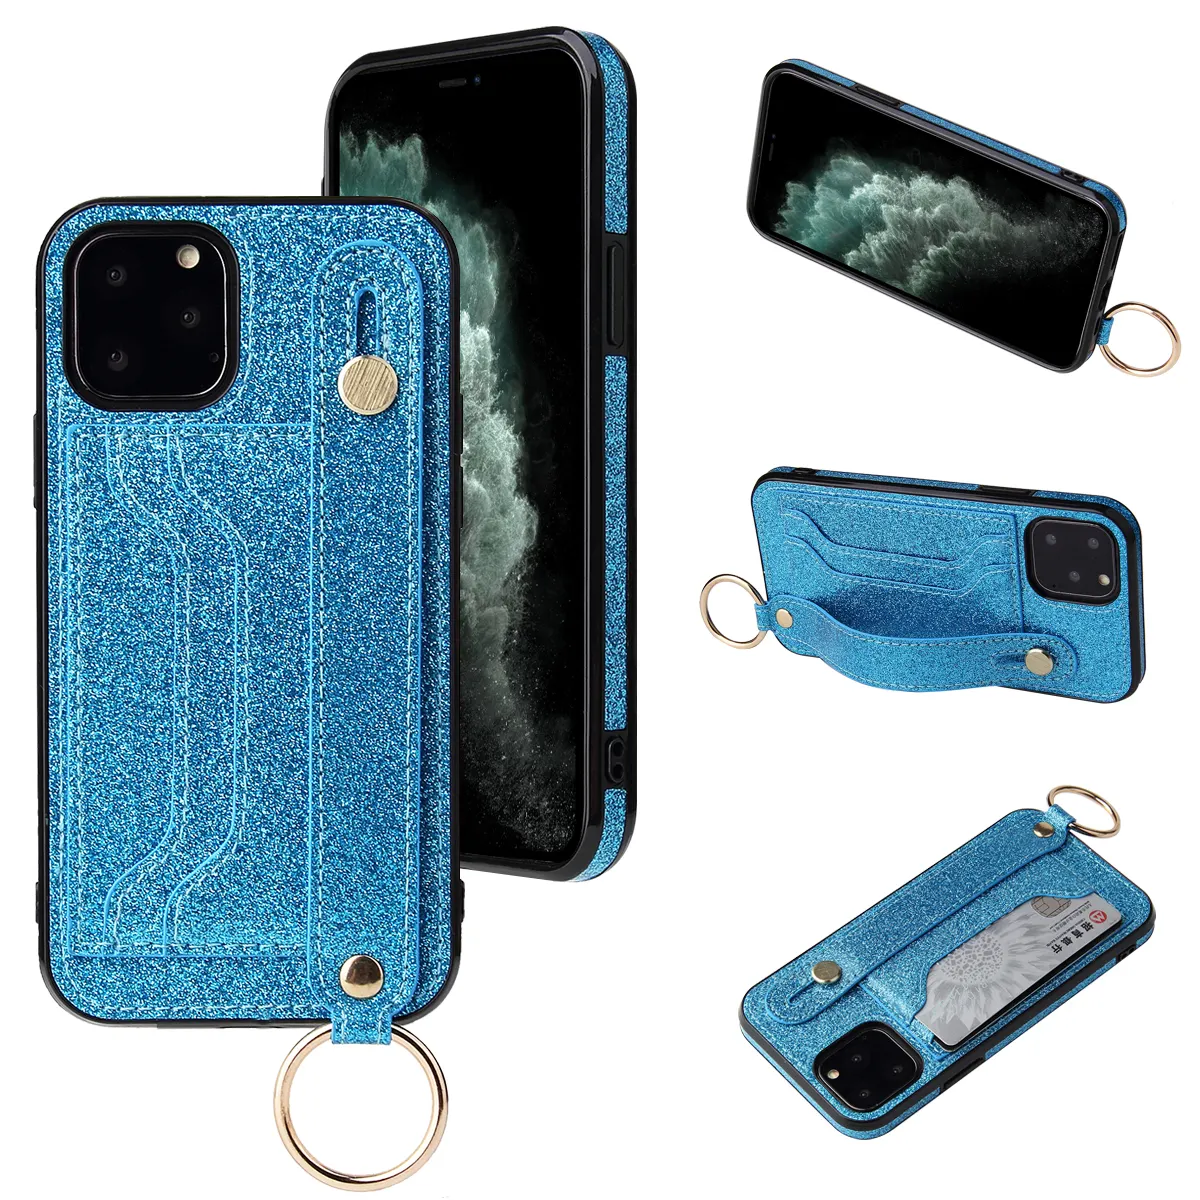 IVANHOE Bling Glitter Case per iPhone 6 6s Plus 7 8 custodia in pelle per telefono Flip Wallet Cover in pelle per iPhone 12 11 Pro Max XR XS